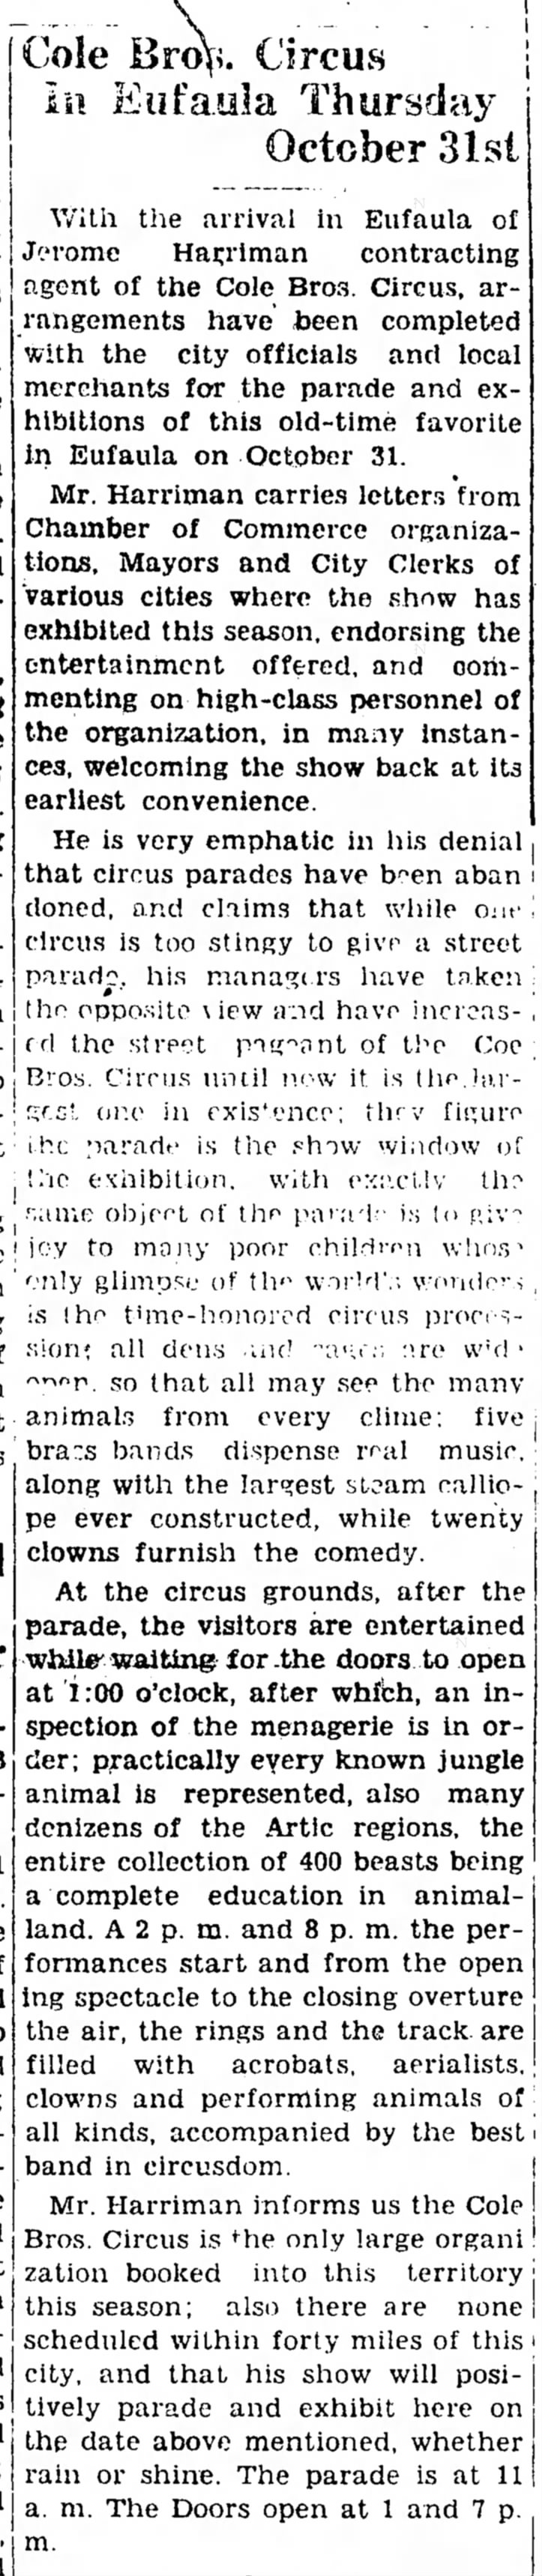 JTH Cole Bros 10-10-1929
Indian Journal, Eufaula OK